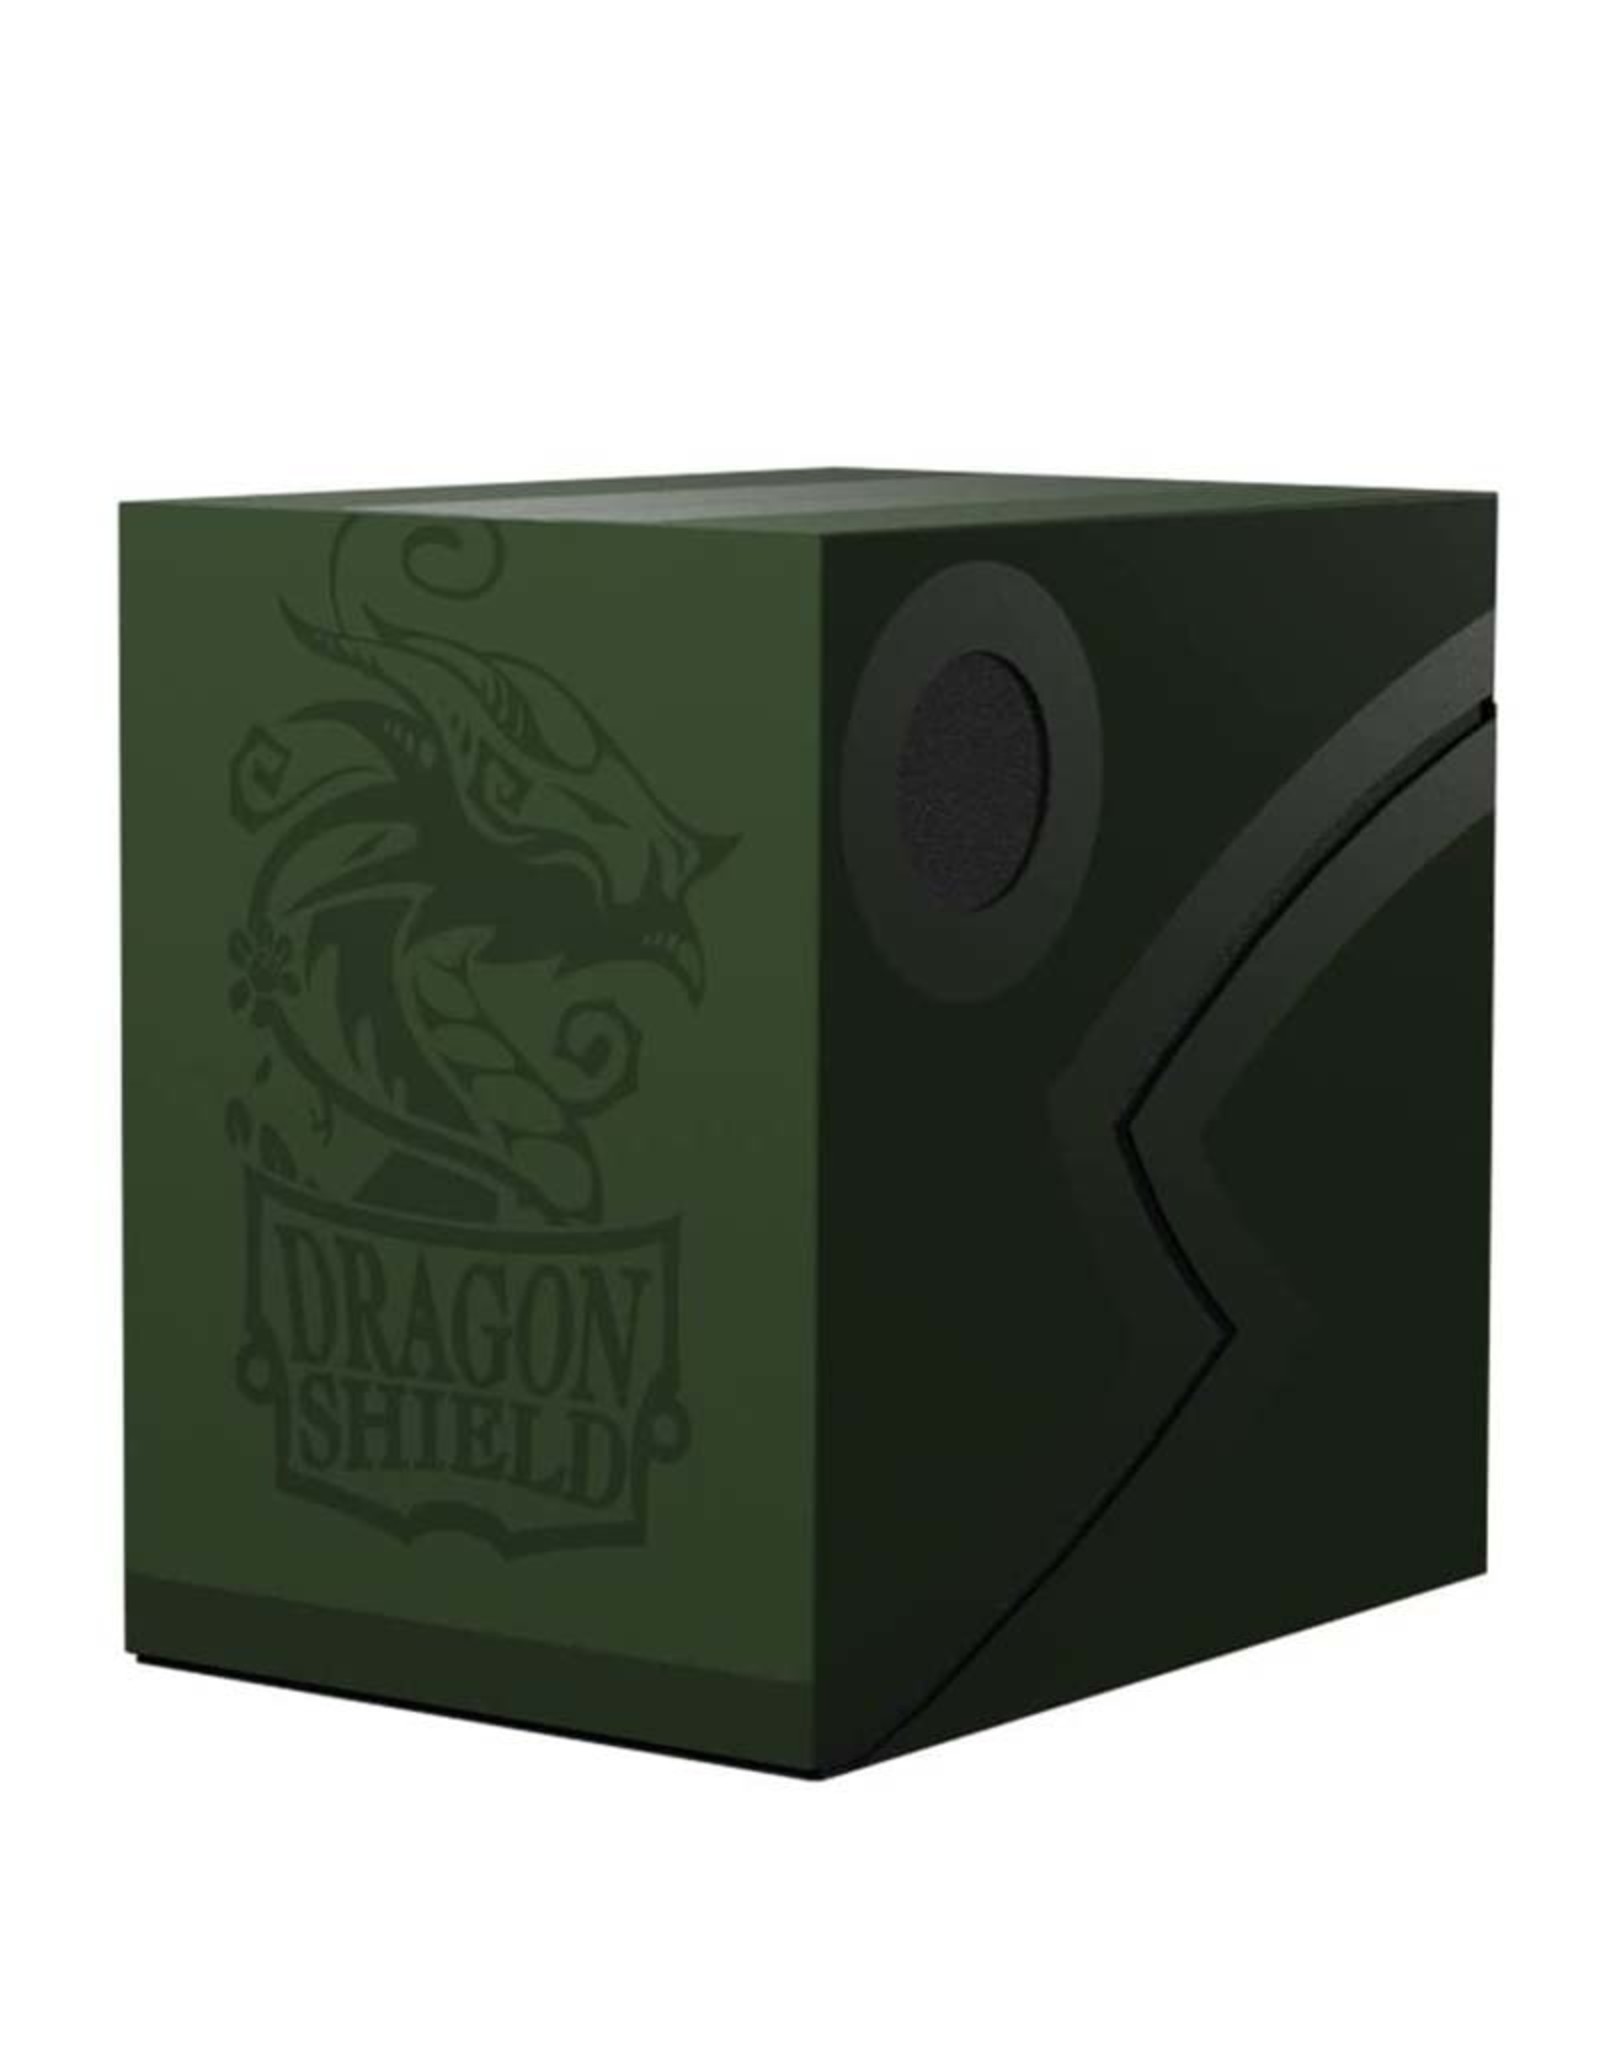 Arcane TinMen Dragon Shield: Double Shell - Forest Green